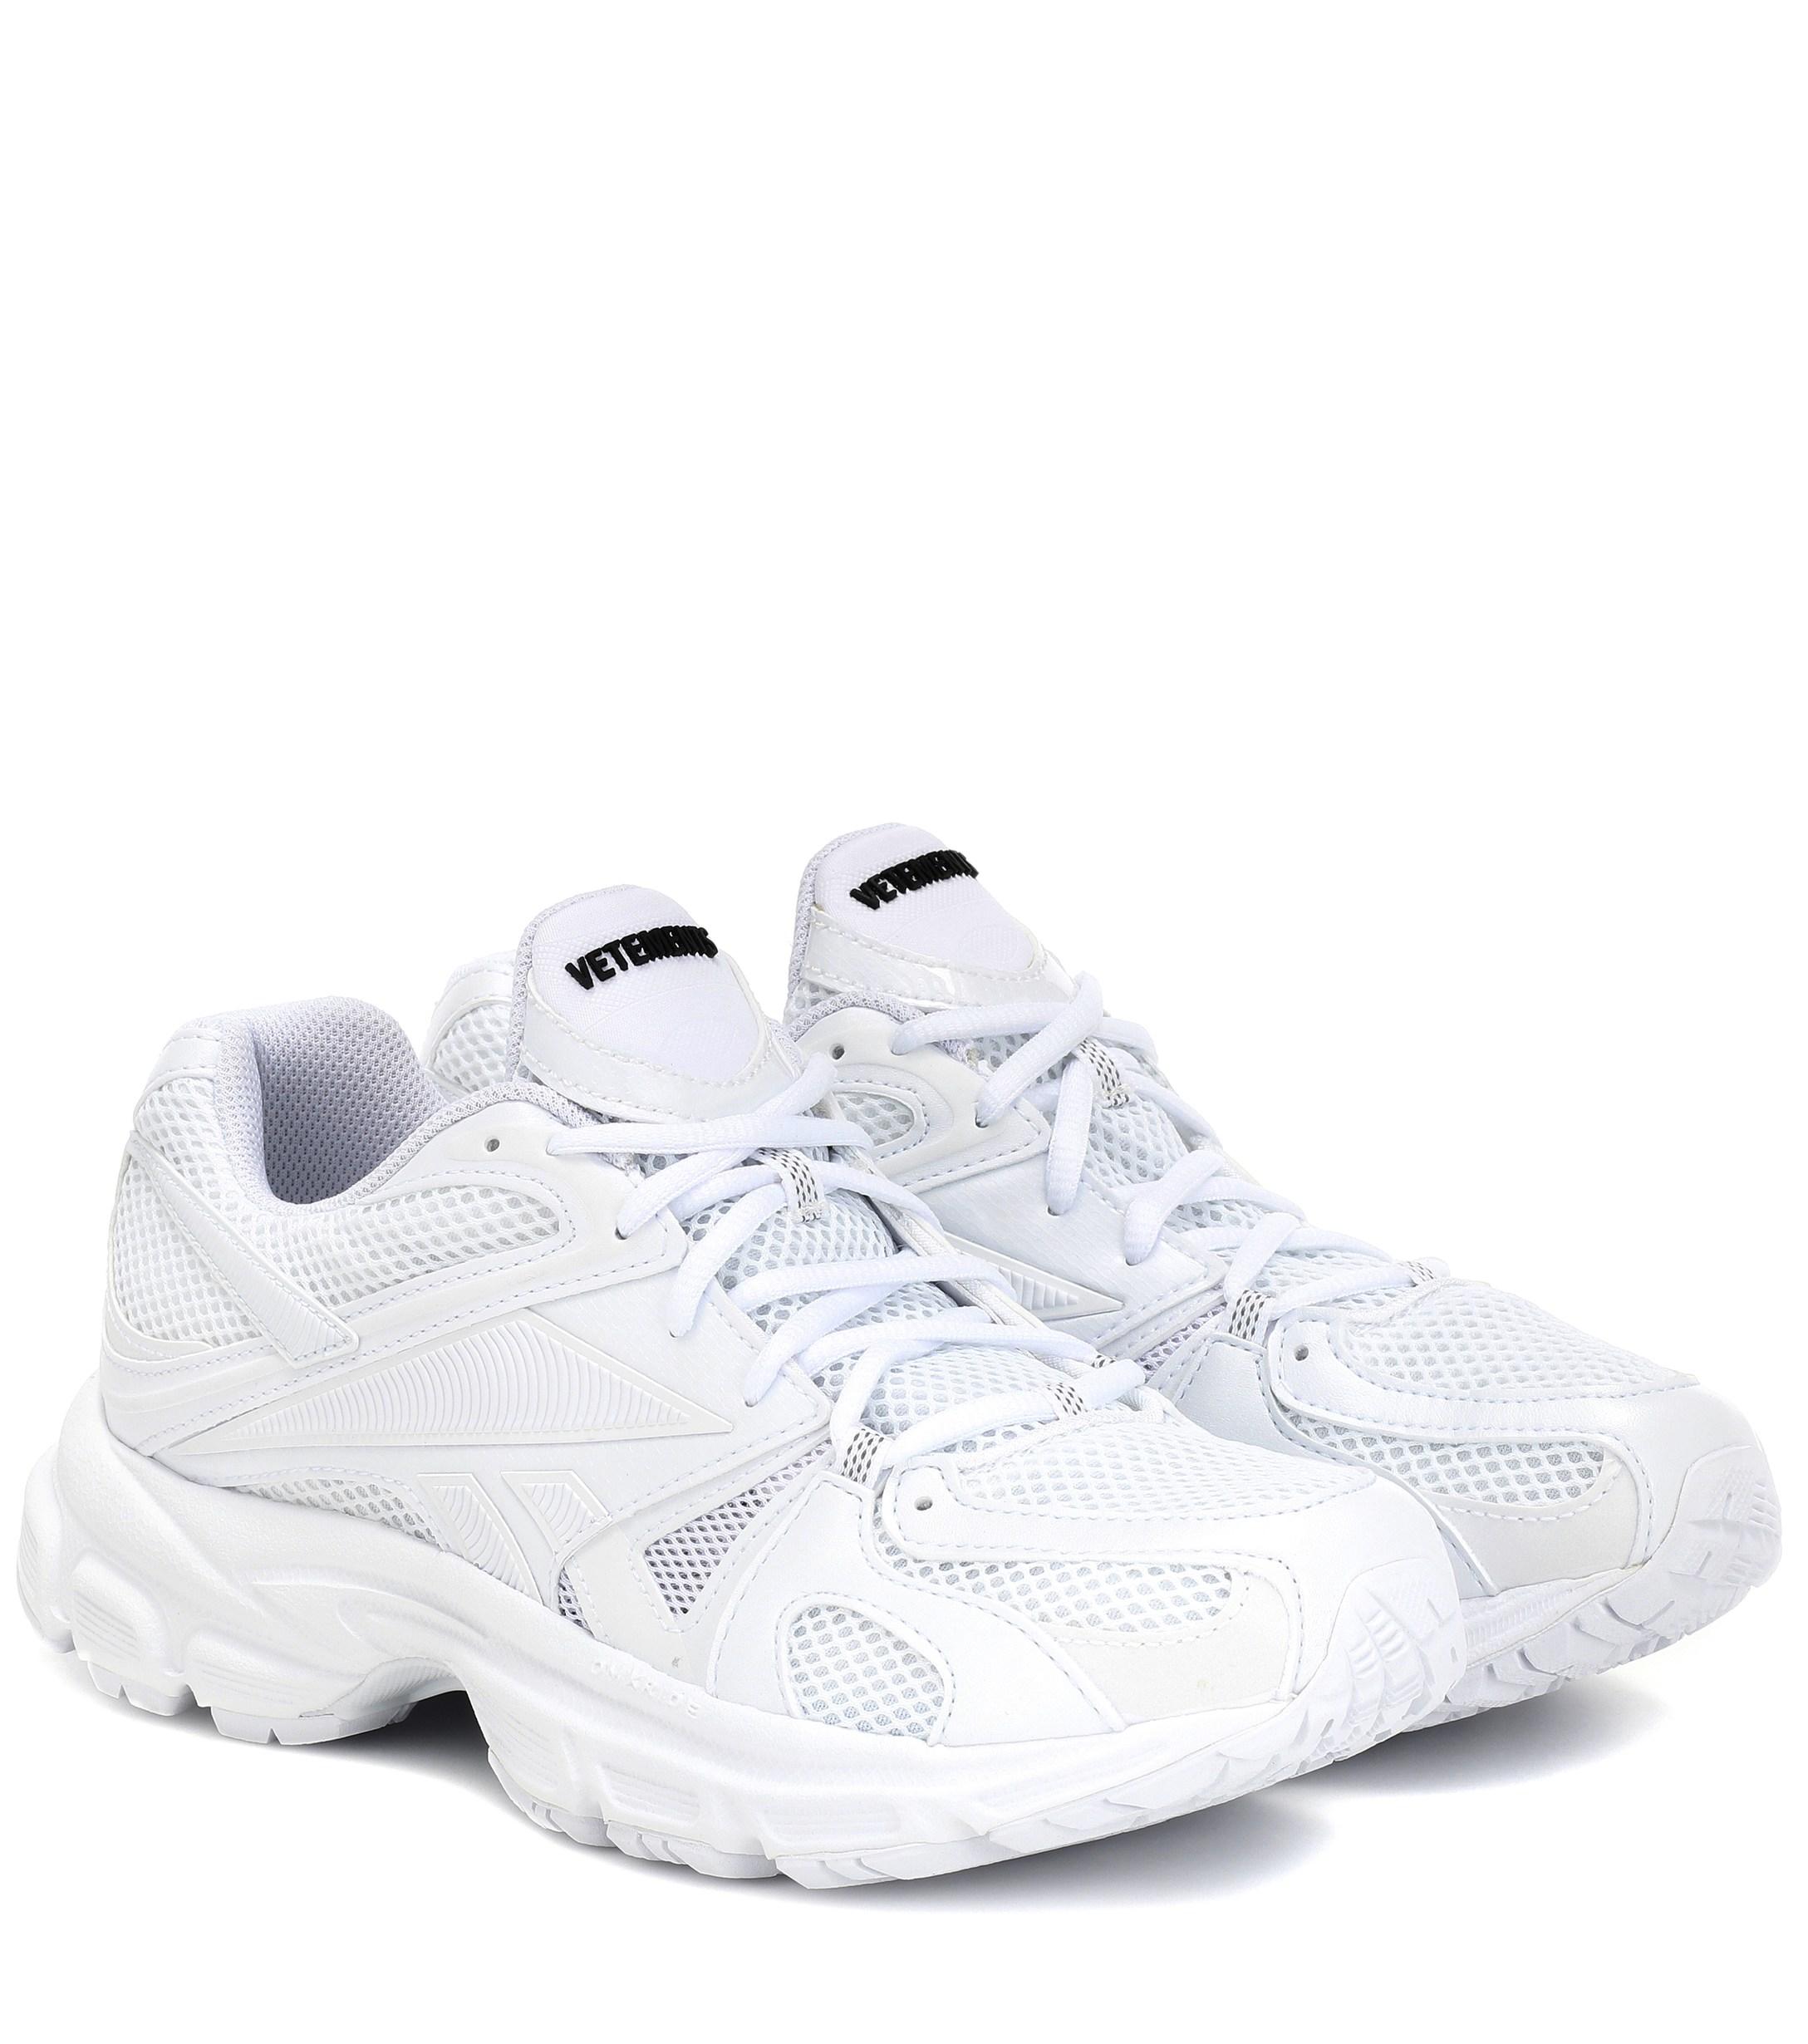 Vetements X Reebok Spike Runner Sneakers in White | Lyst